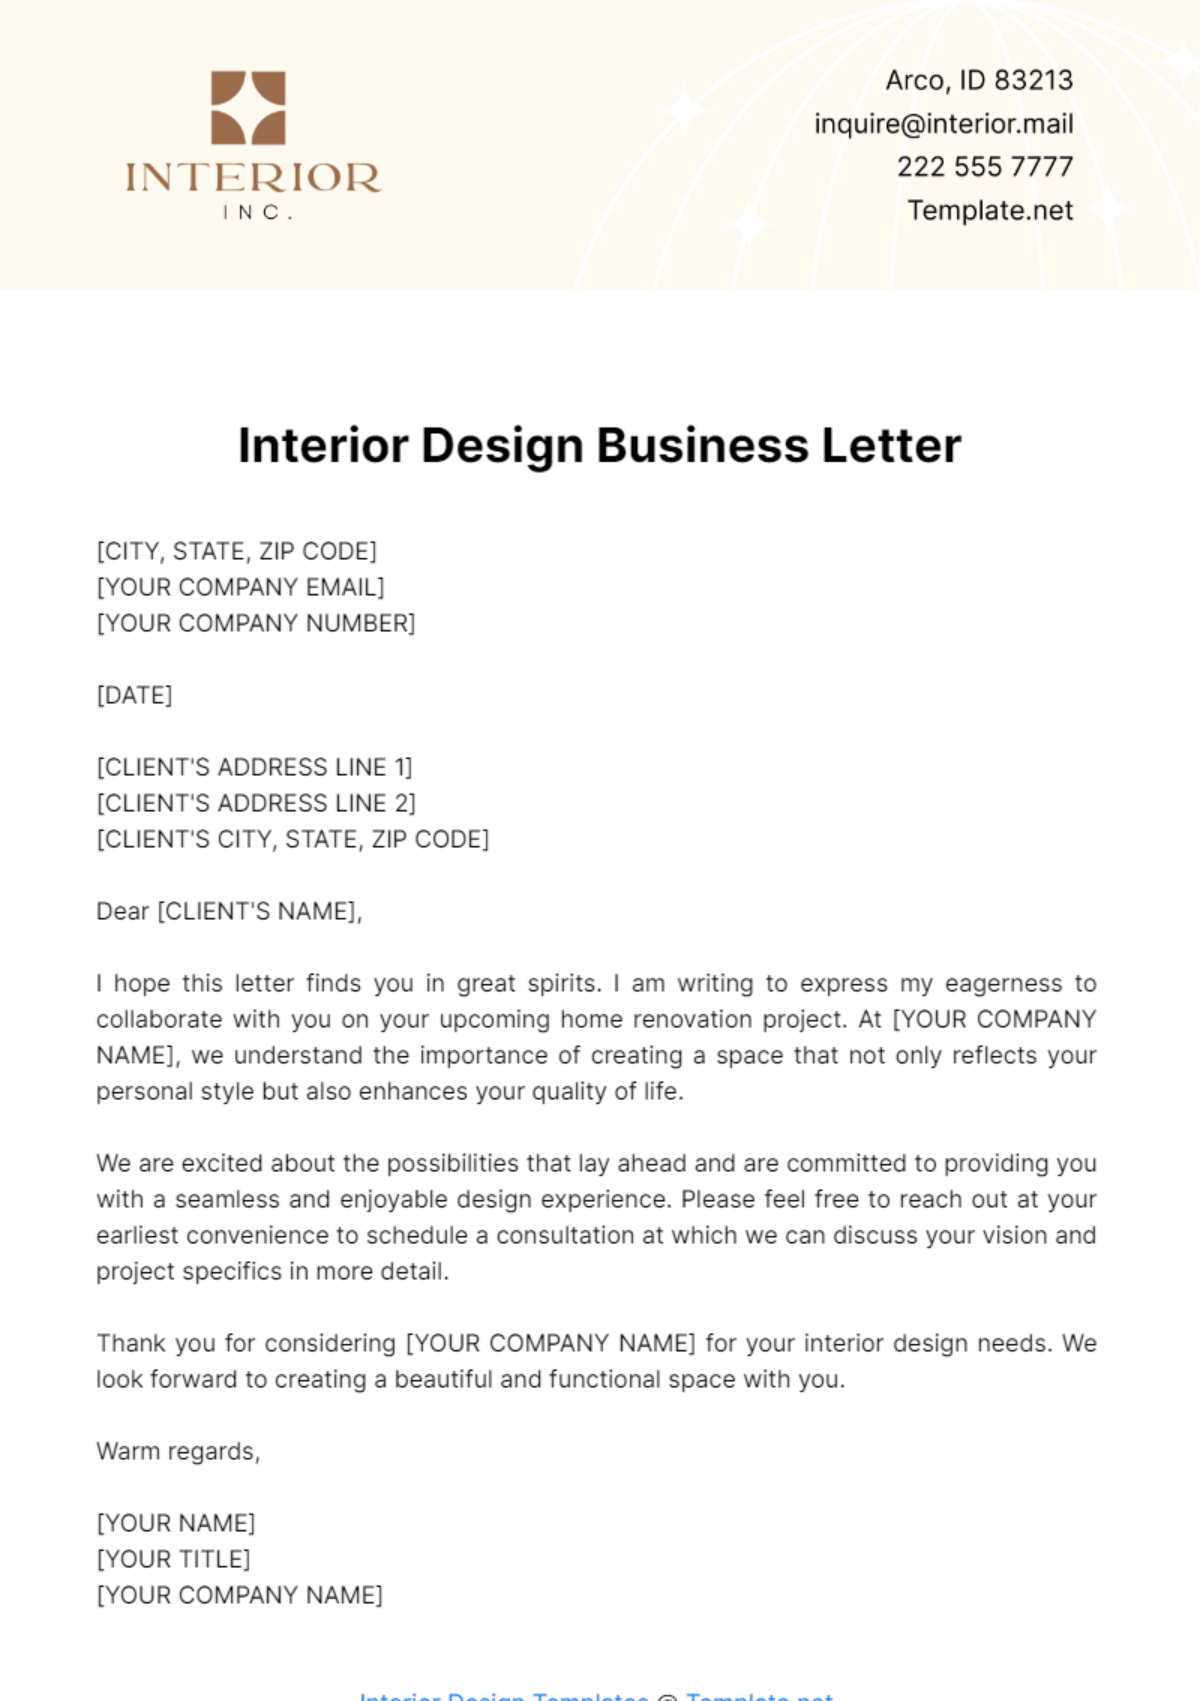 Interior Design Business Letter Template